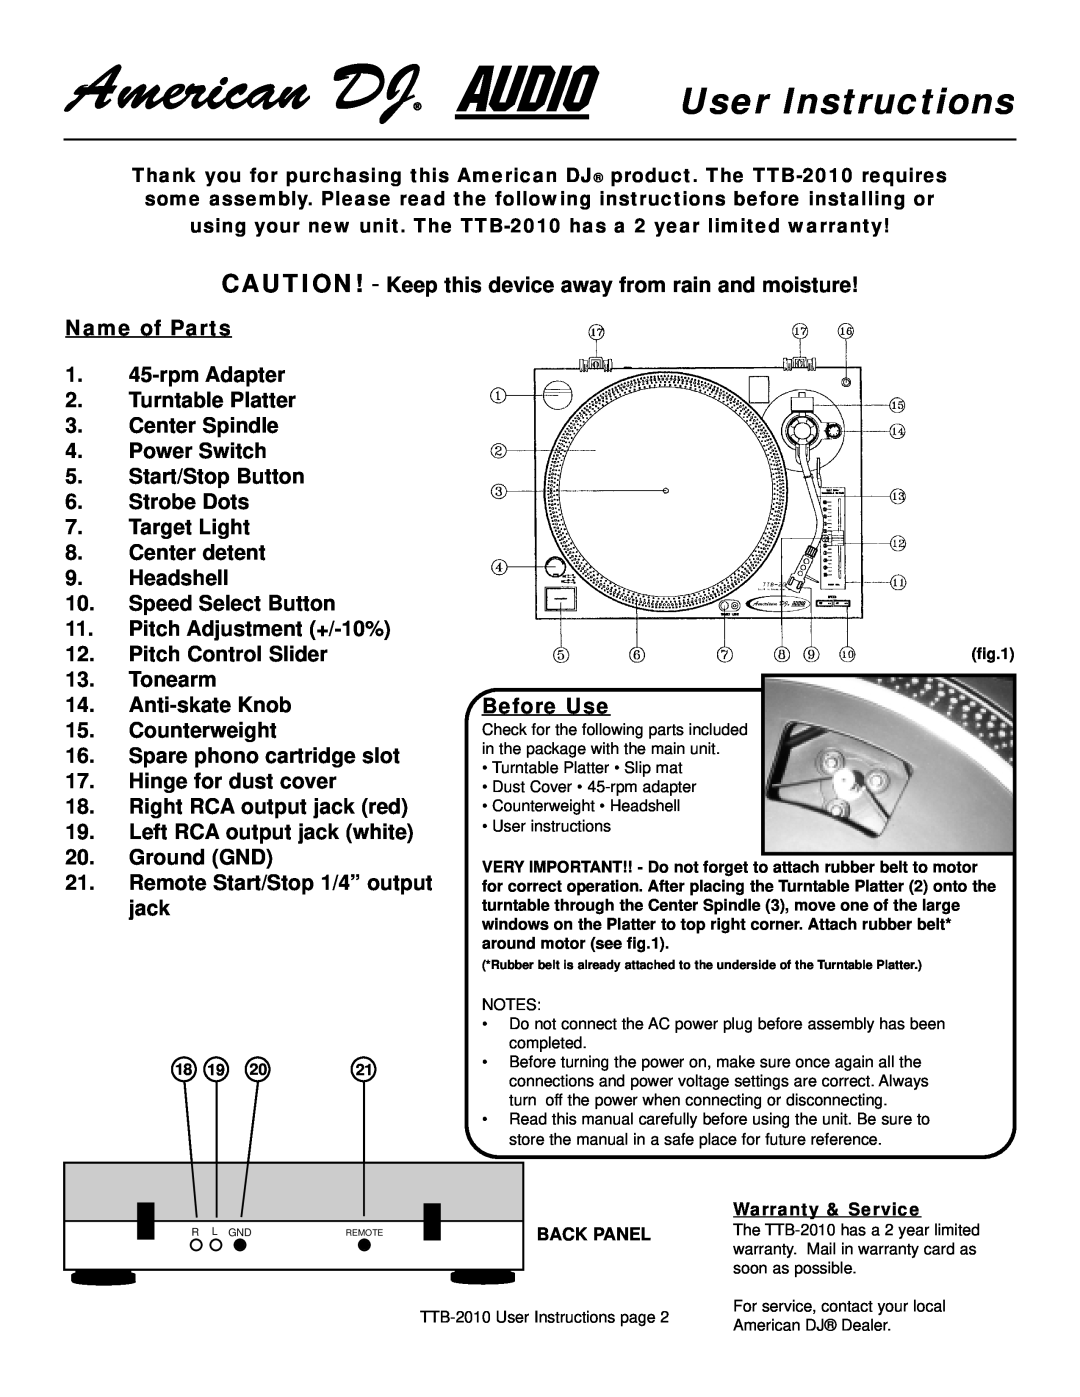 American Audio TTB-2010 manual User Instructions 